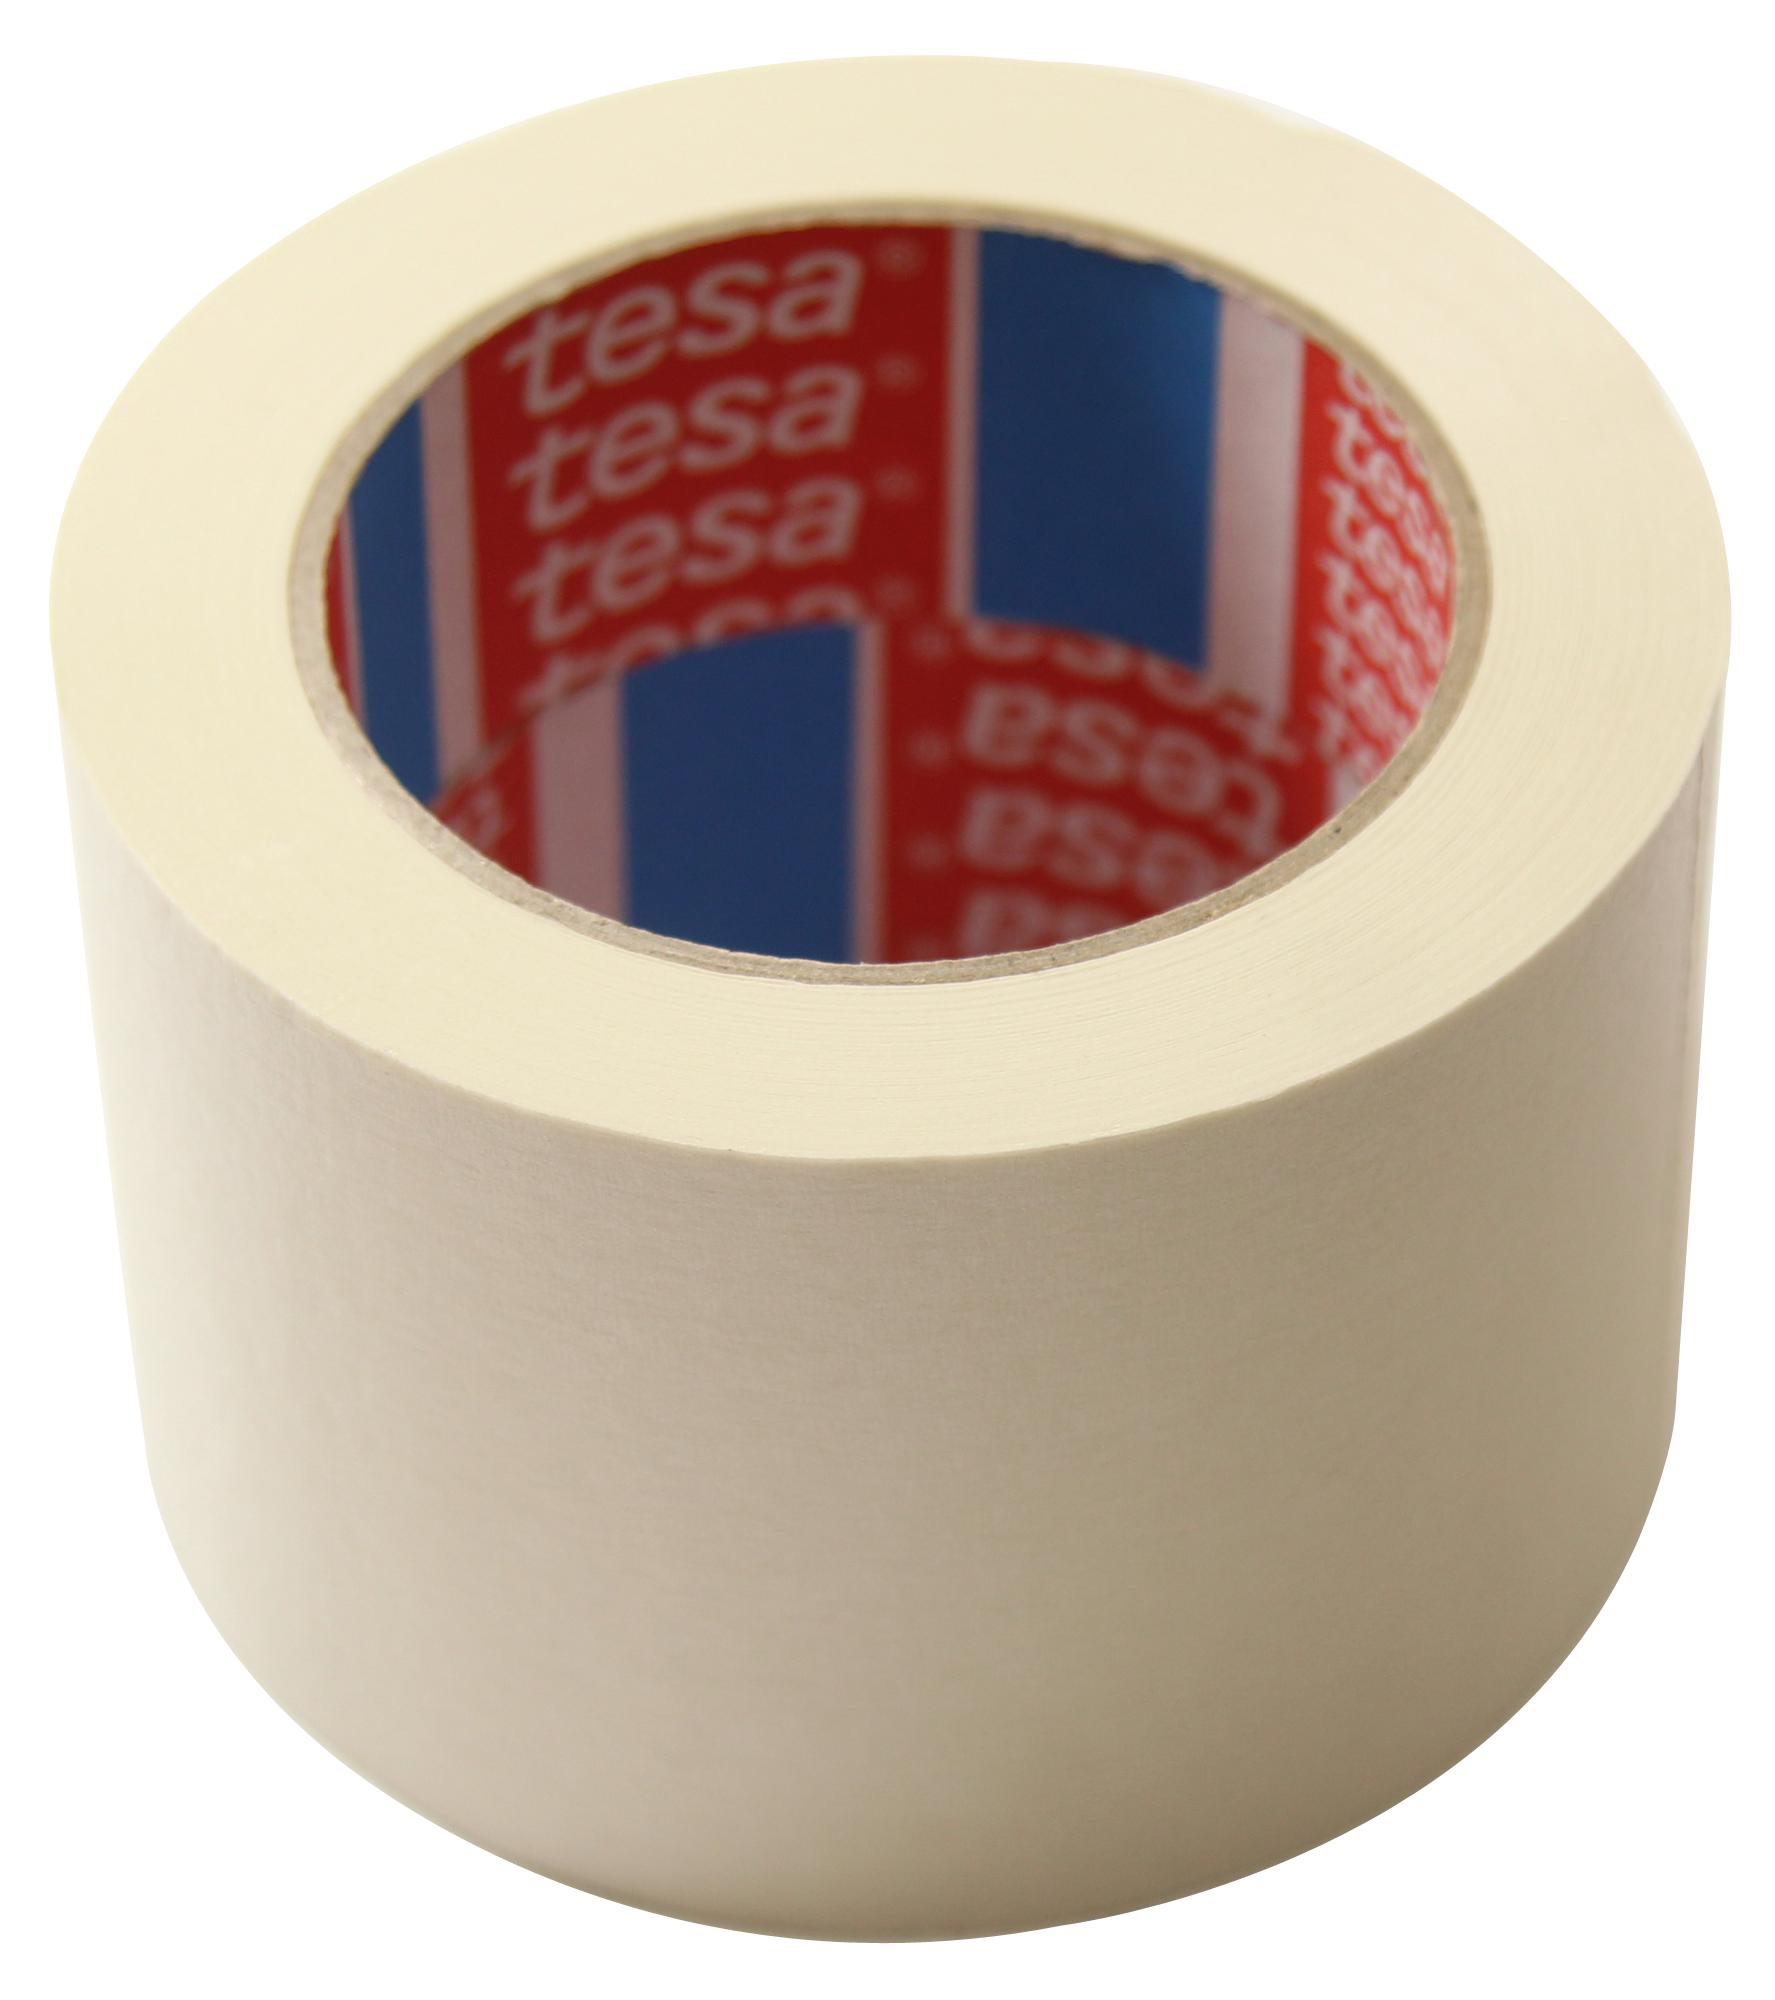 Tesa 04713-00005-00 Tape, White, 75mm X 50M